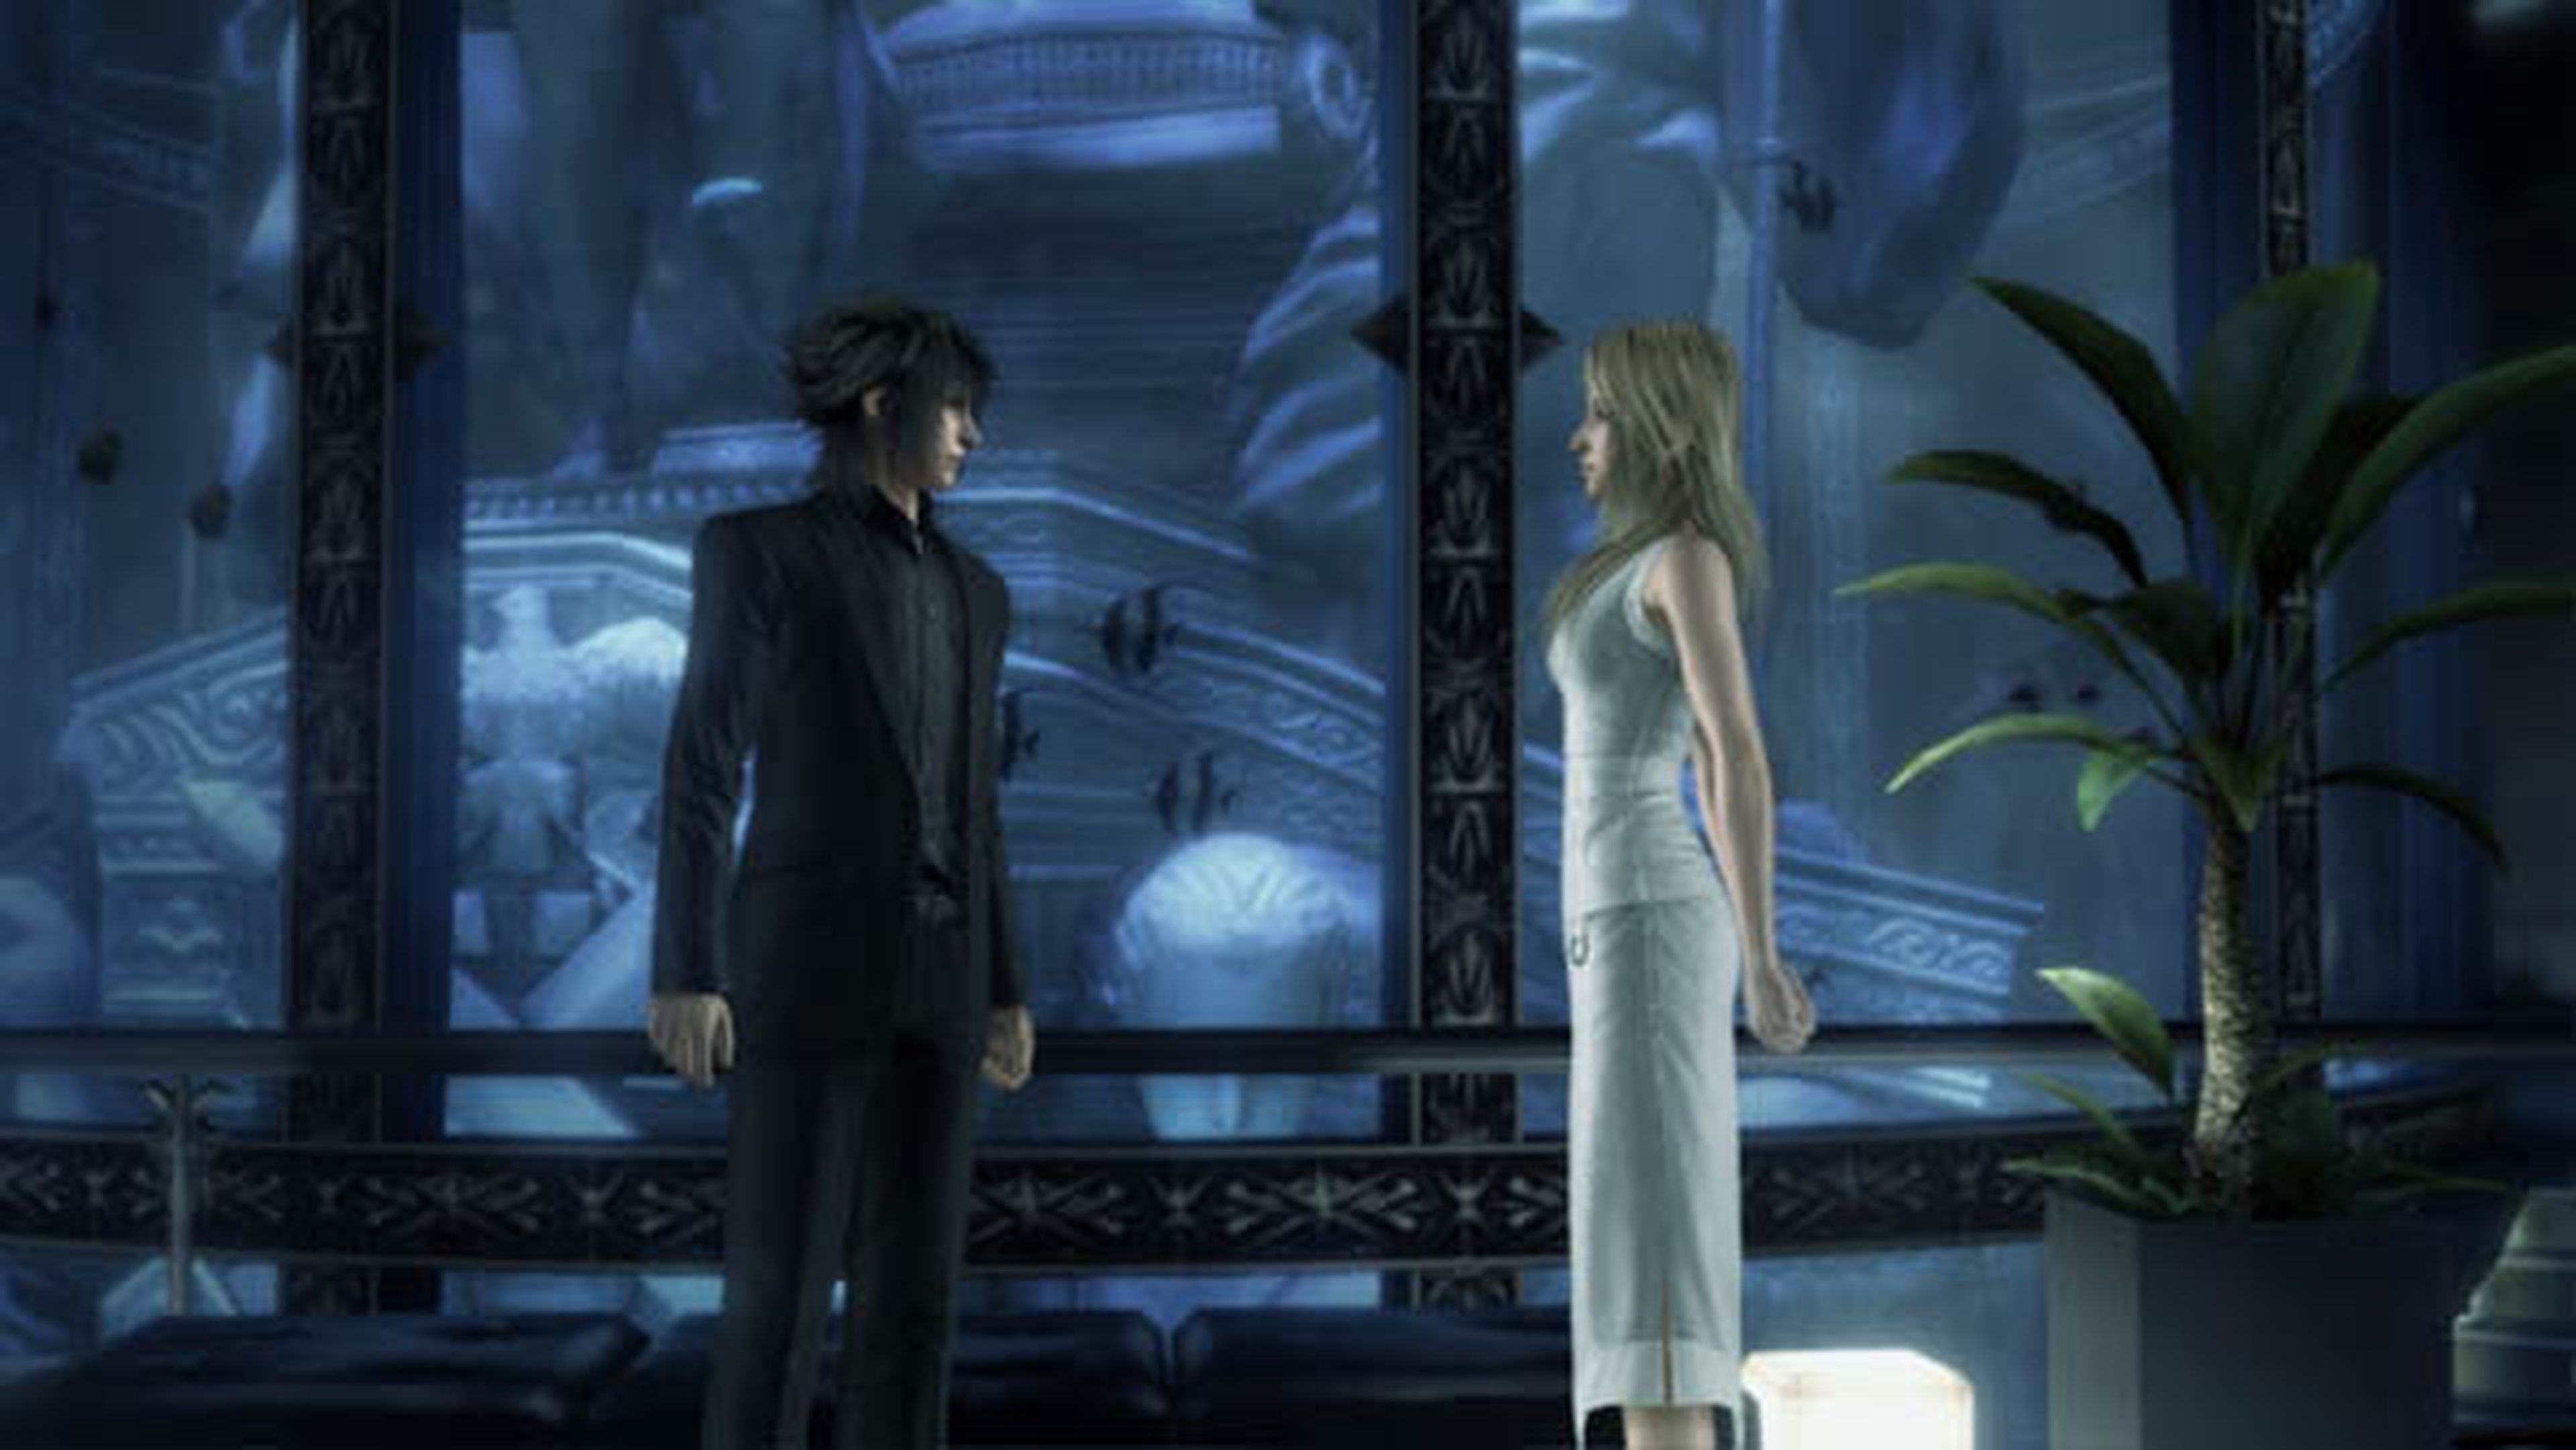 Final Fantasy Versus XIII se salta el E3 2012